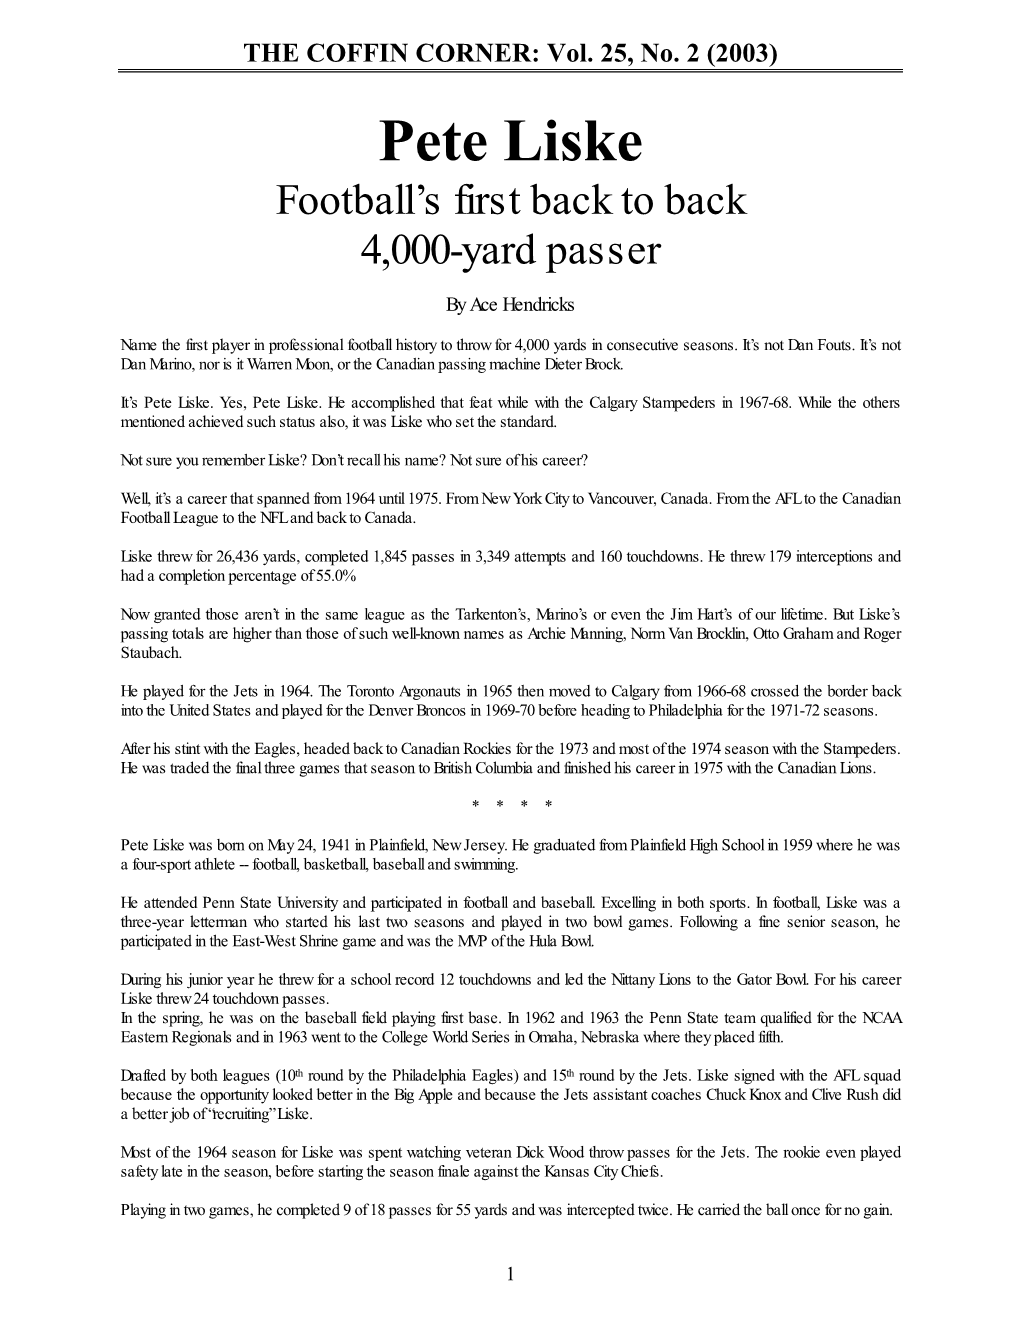 Pete Liske Football’S First Back to Back 4,000-Yard Passer